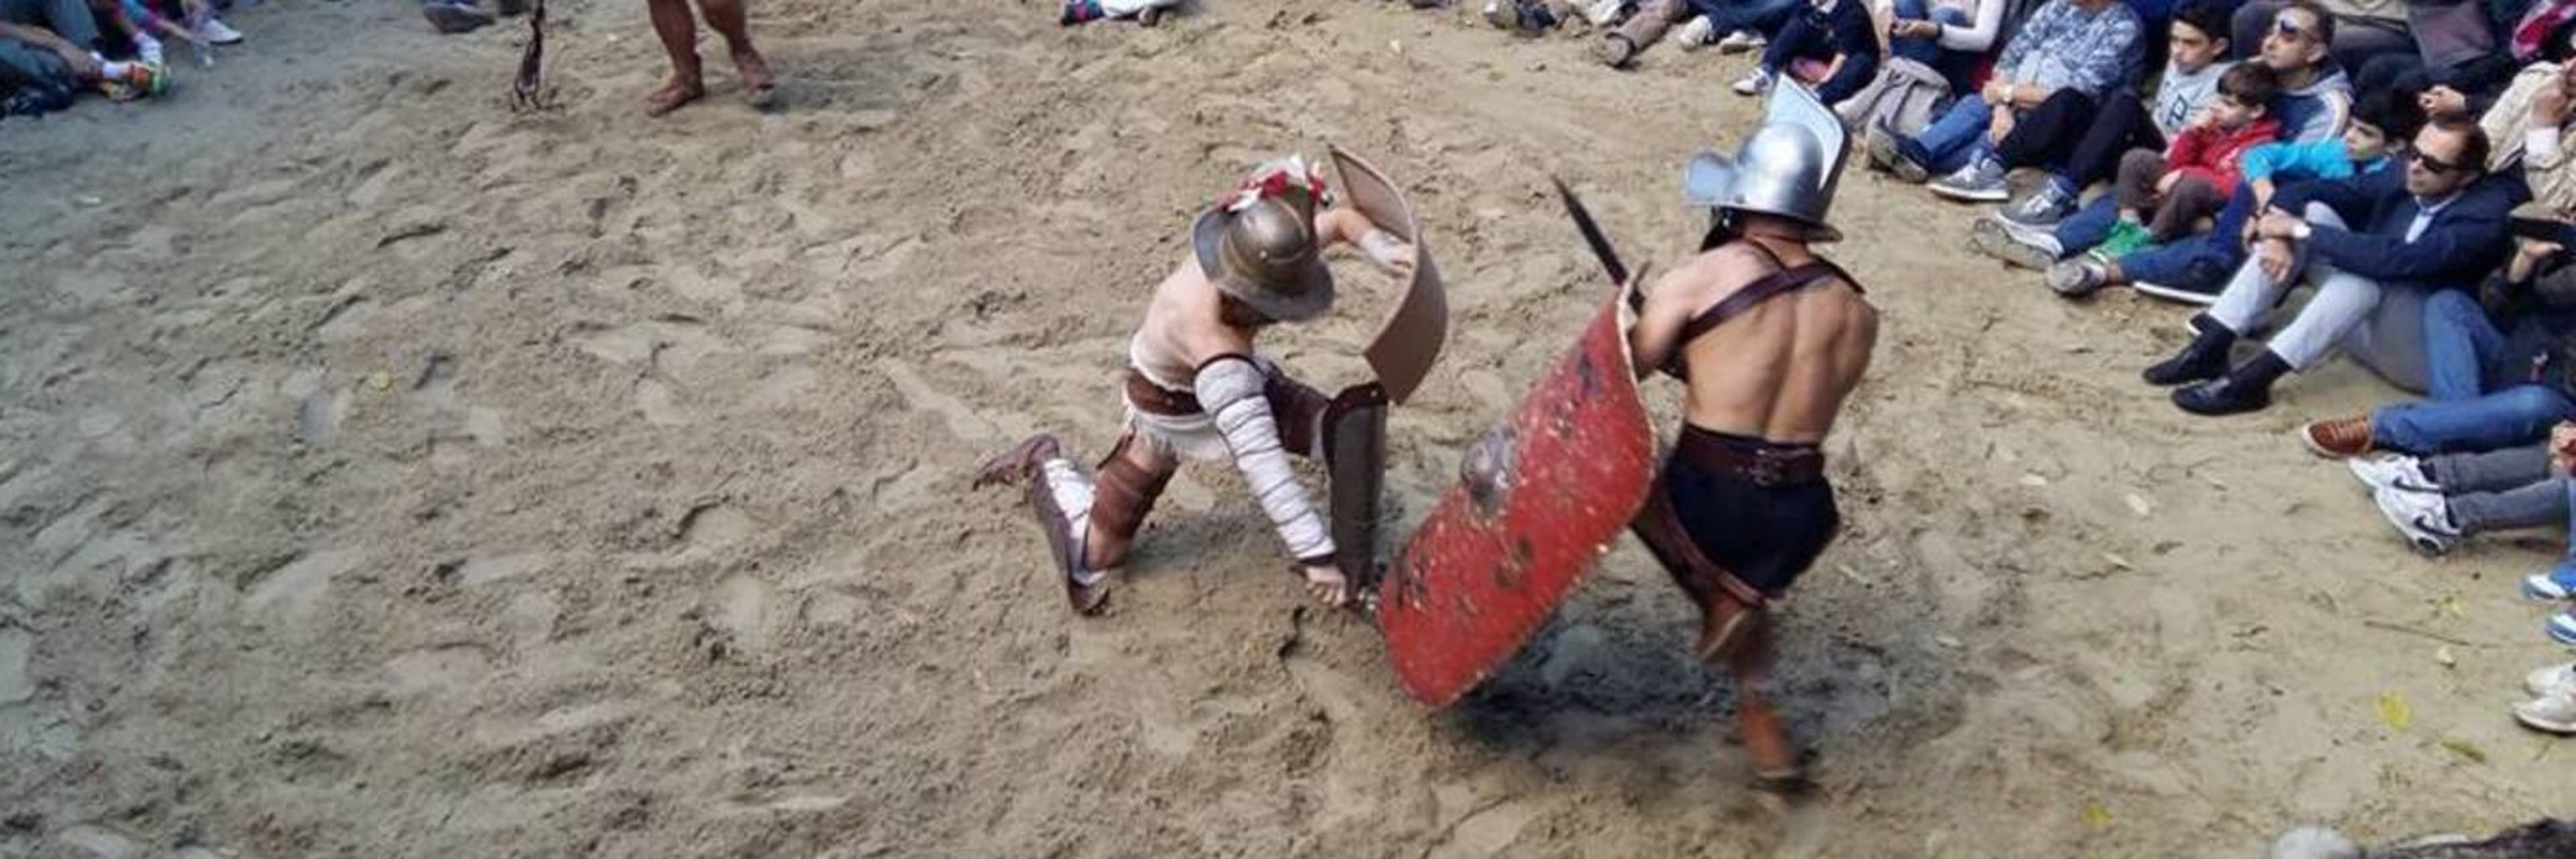 Gladiators in combat at Roma World.